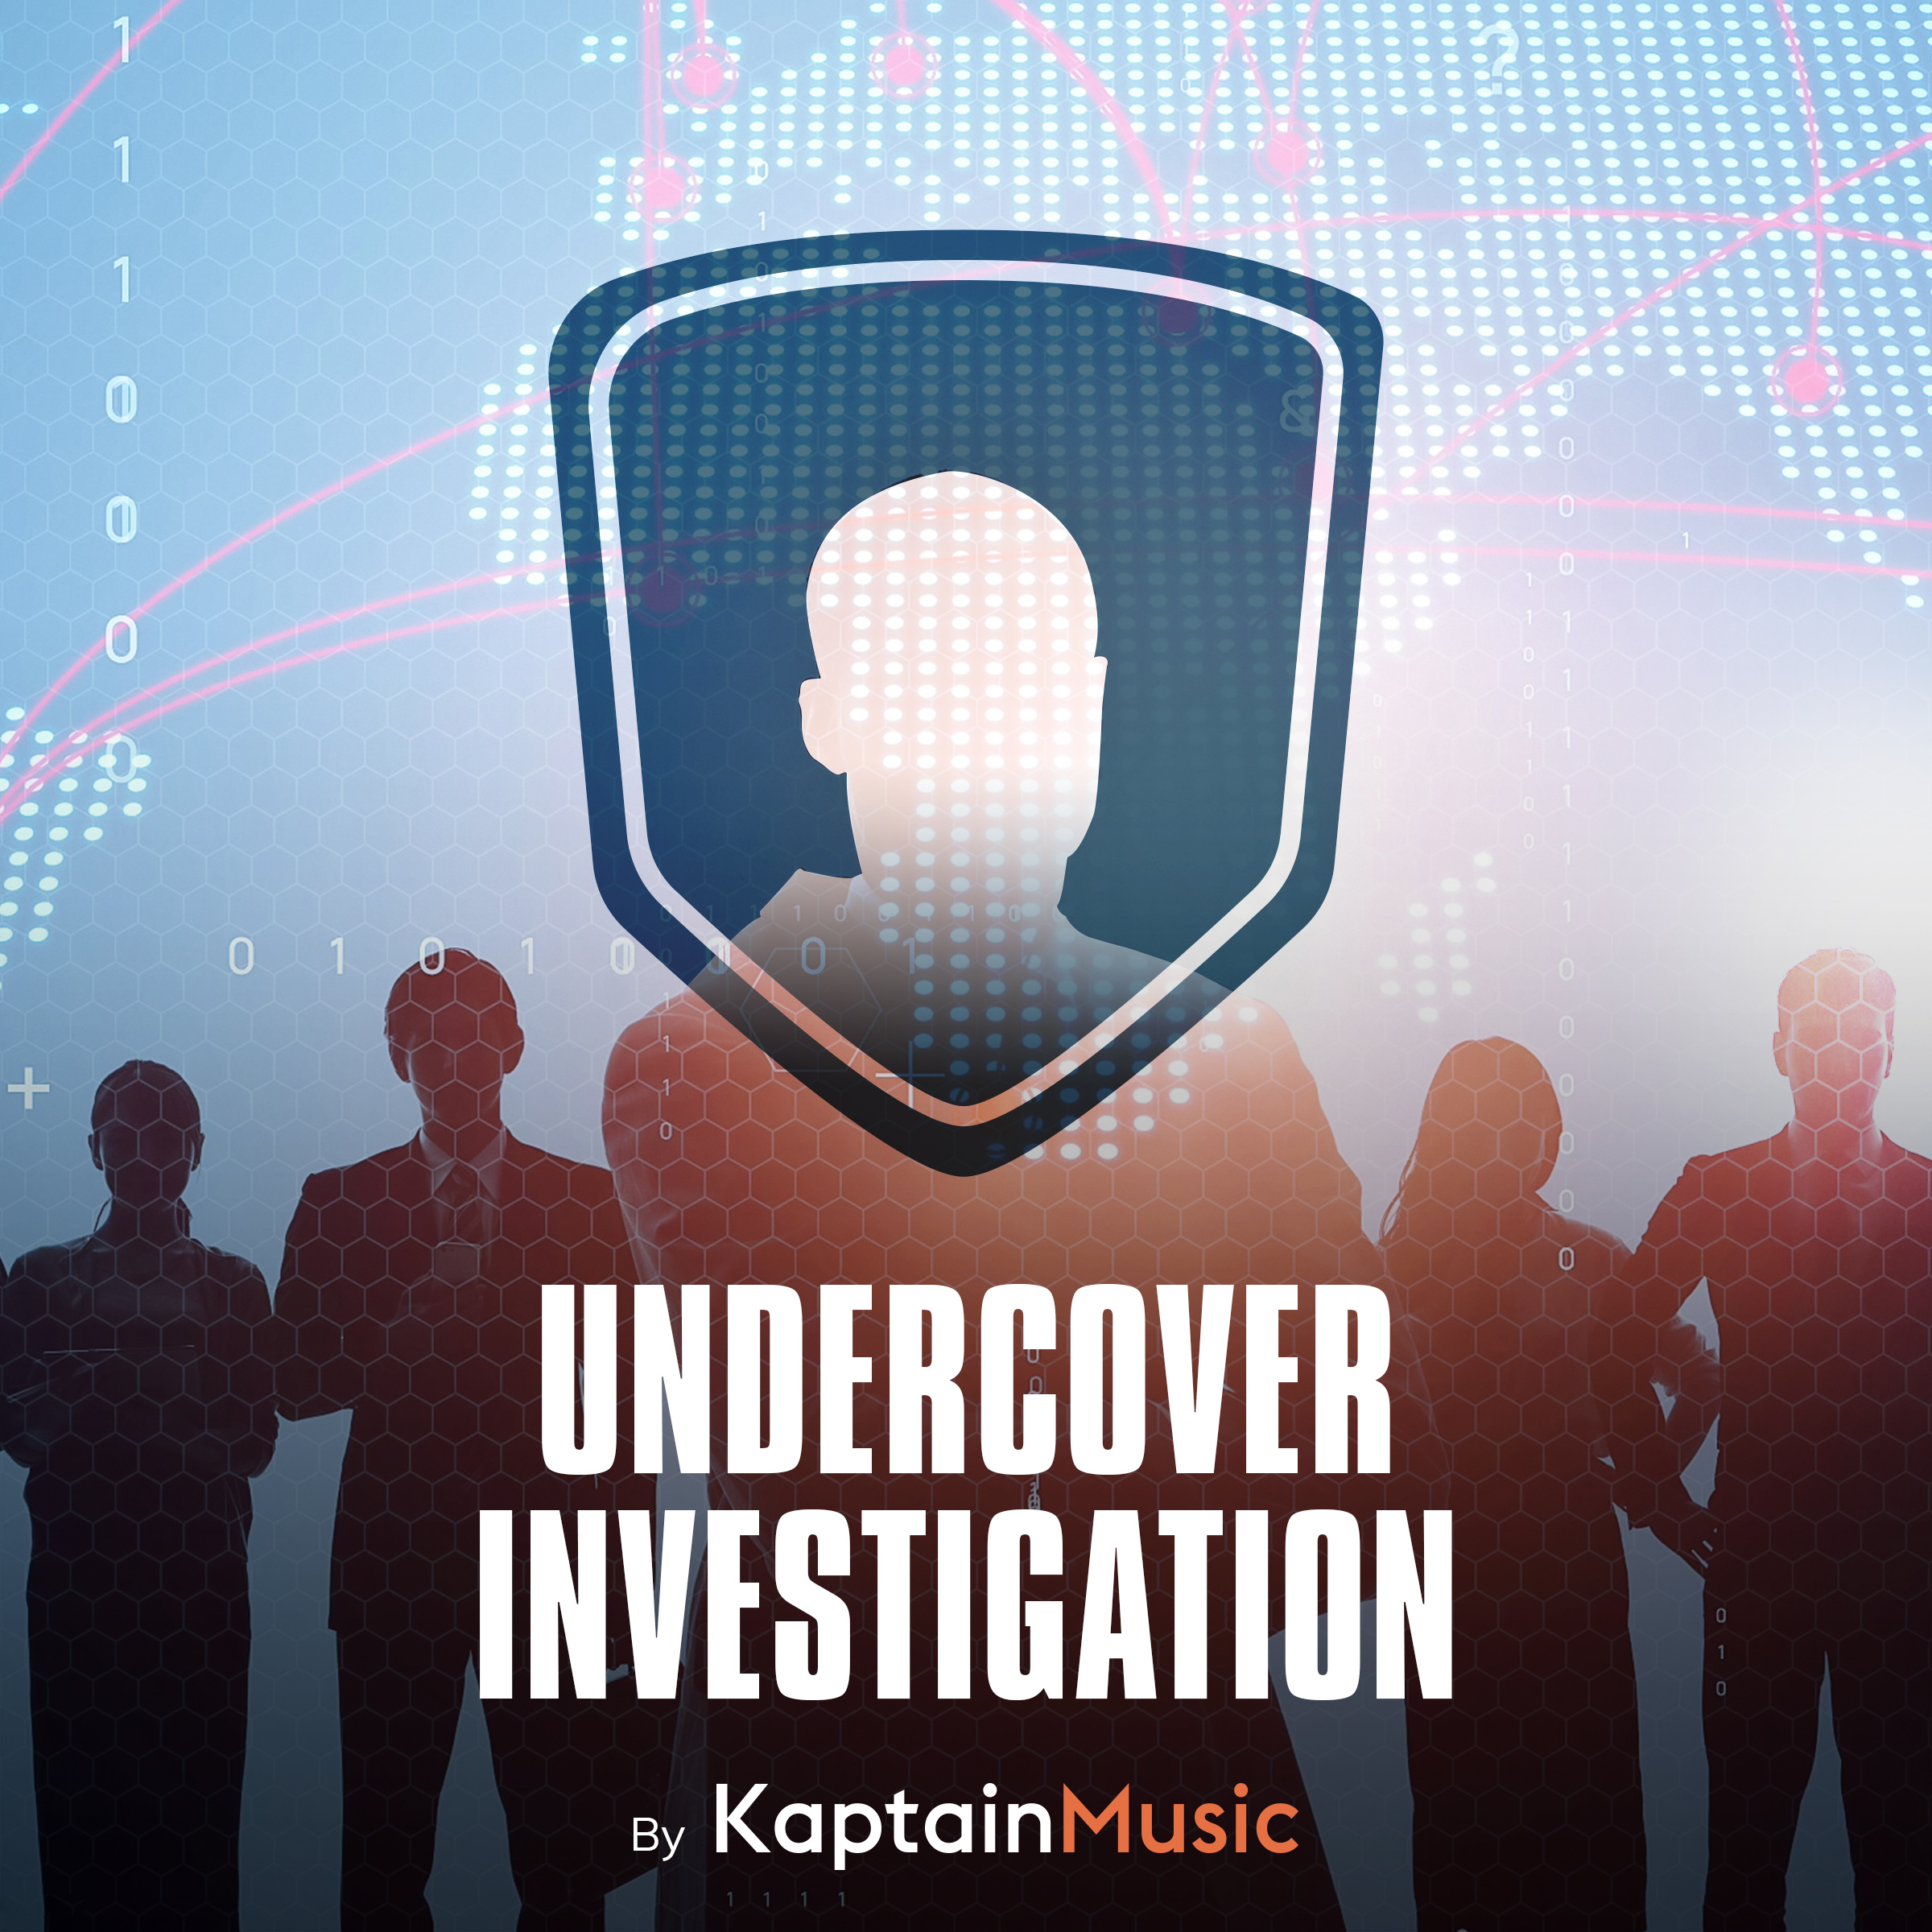 Undercover Investigation